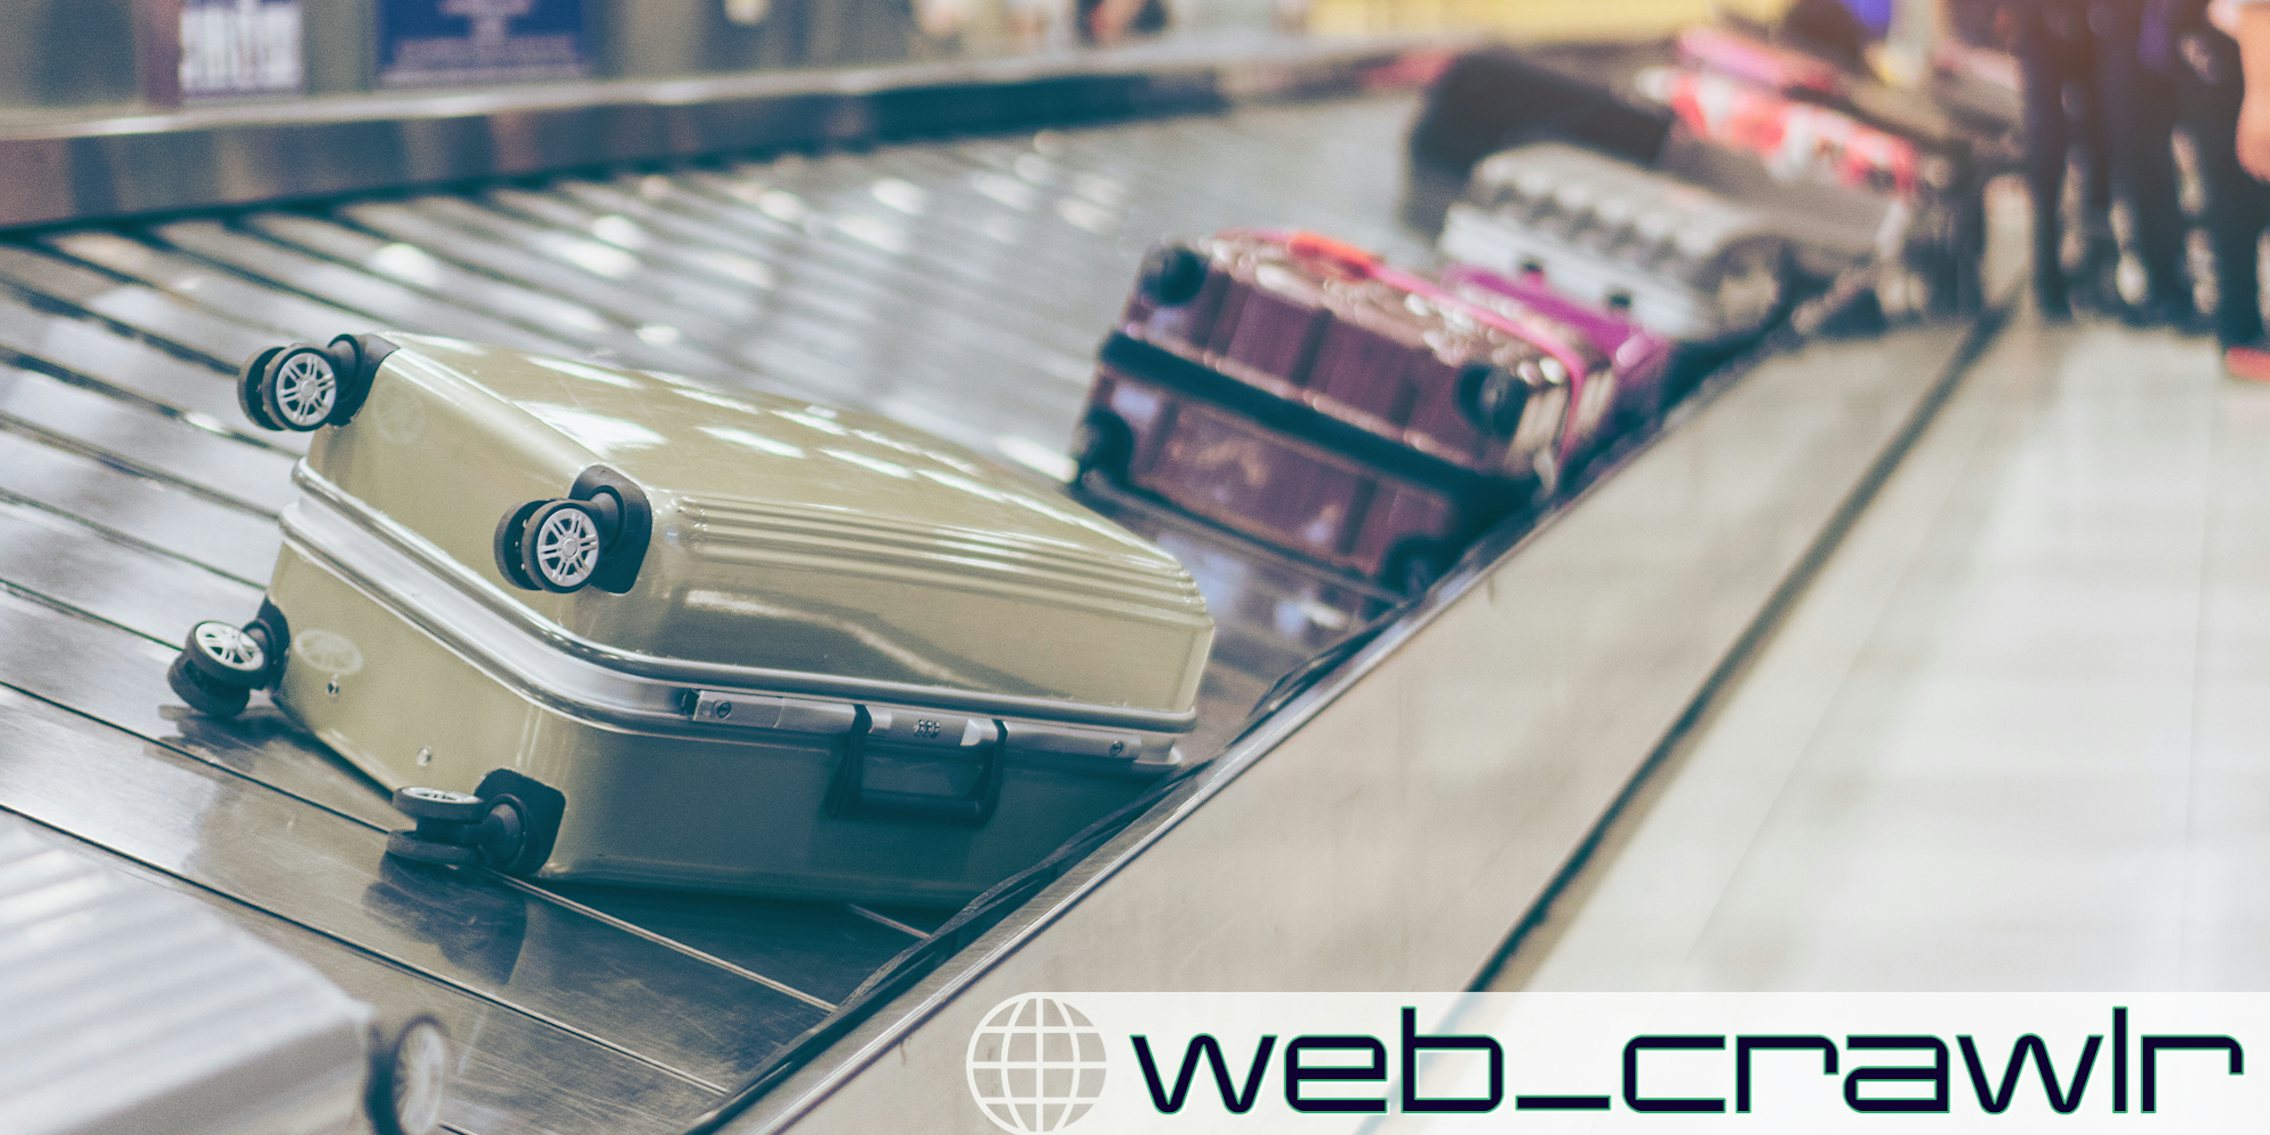 Web Crawler Airport Luggage